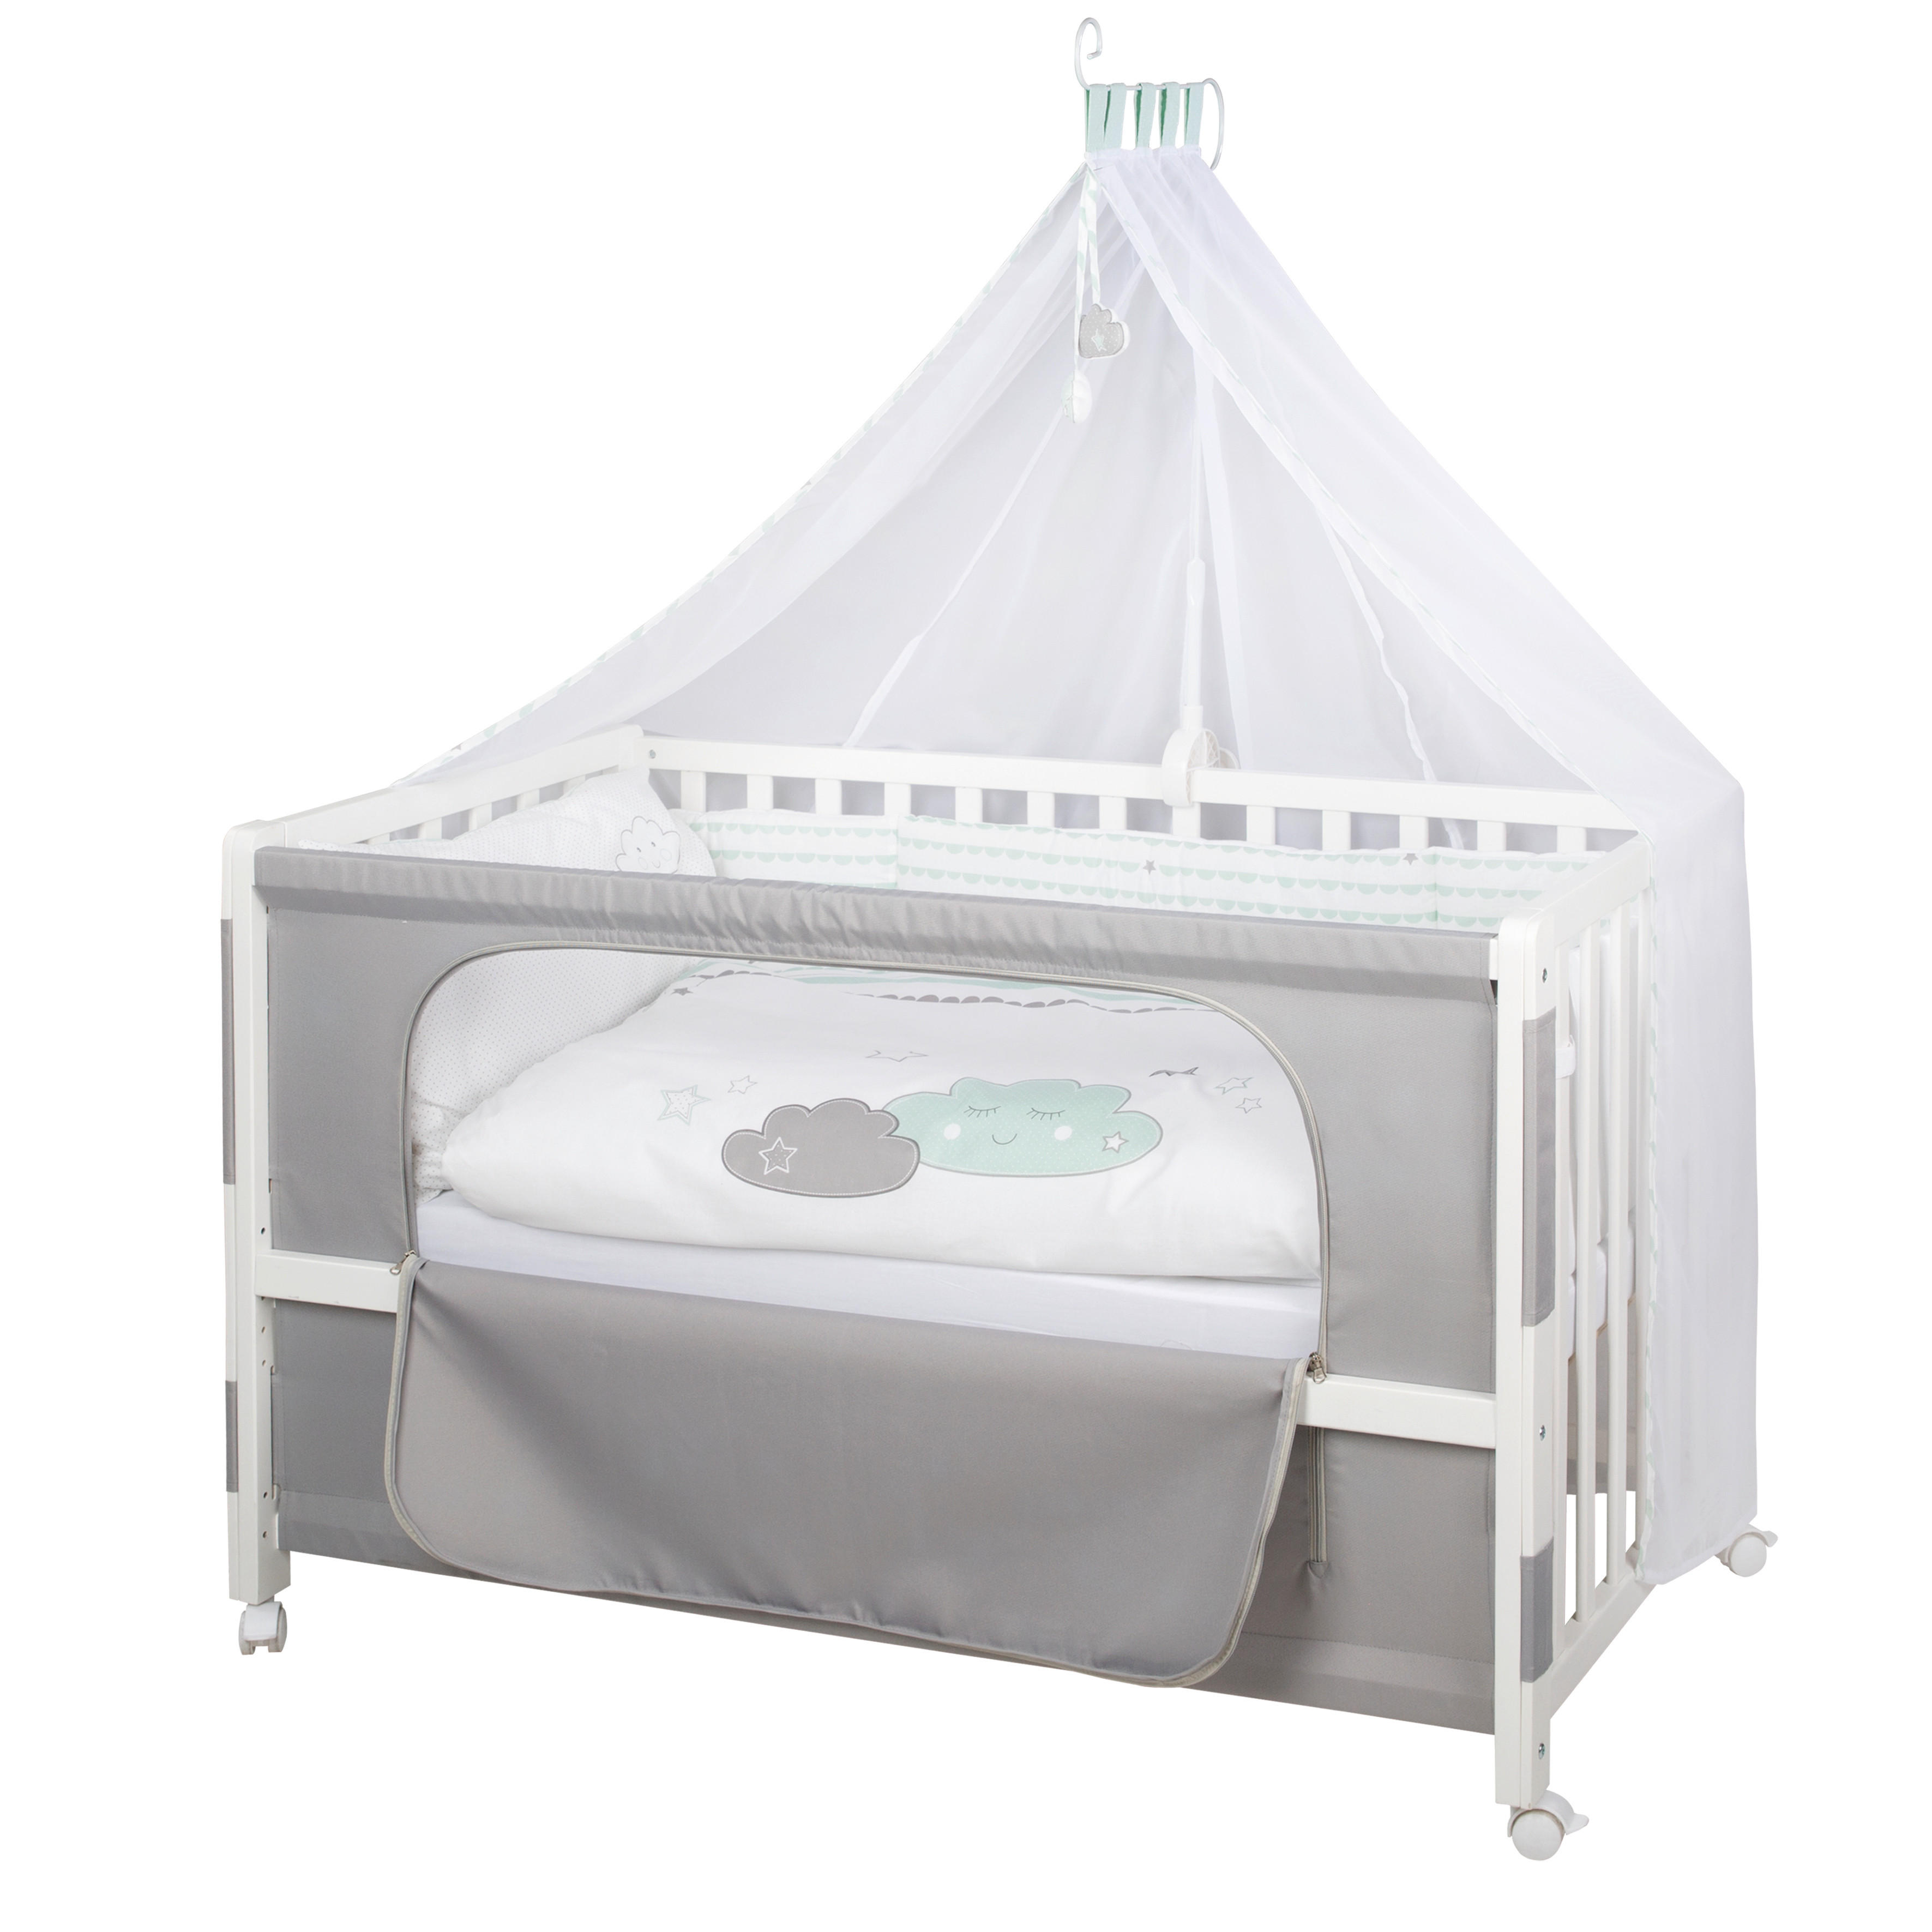 GITTERBETT-KOMPLETTSET Room Bed Happy Cloud   60/120 cm  - Weiß/Hellgrün, Basics, Holz/Textil (60/120cm) - Roba